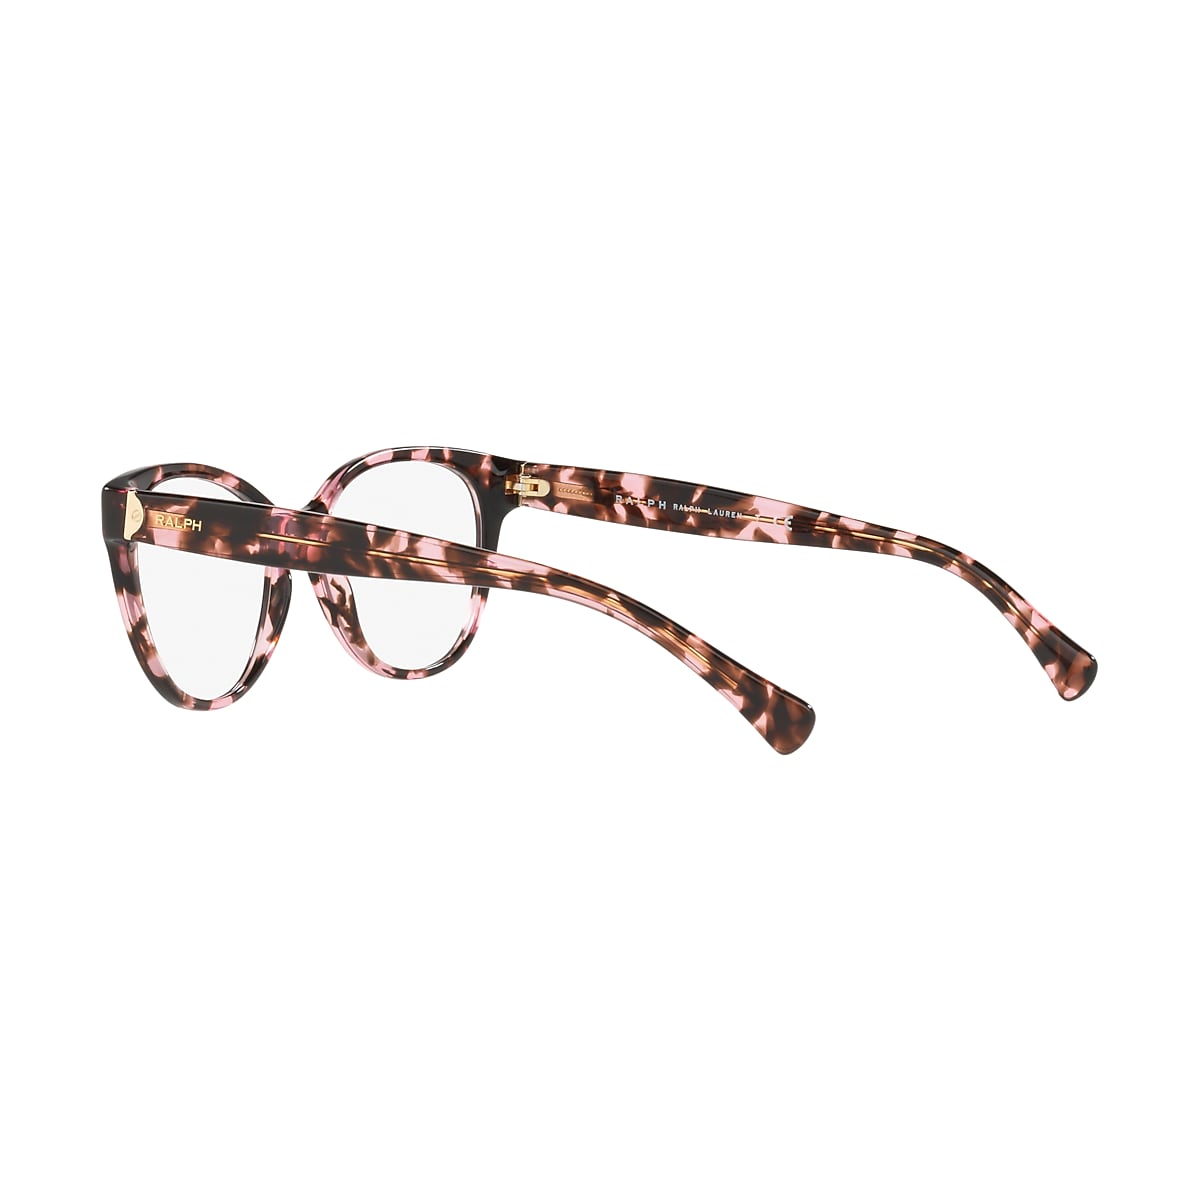 Target in 0RA7103 Pink/purple Glasses | Ralph Optical